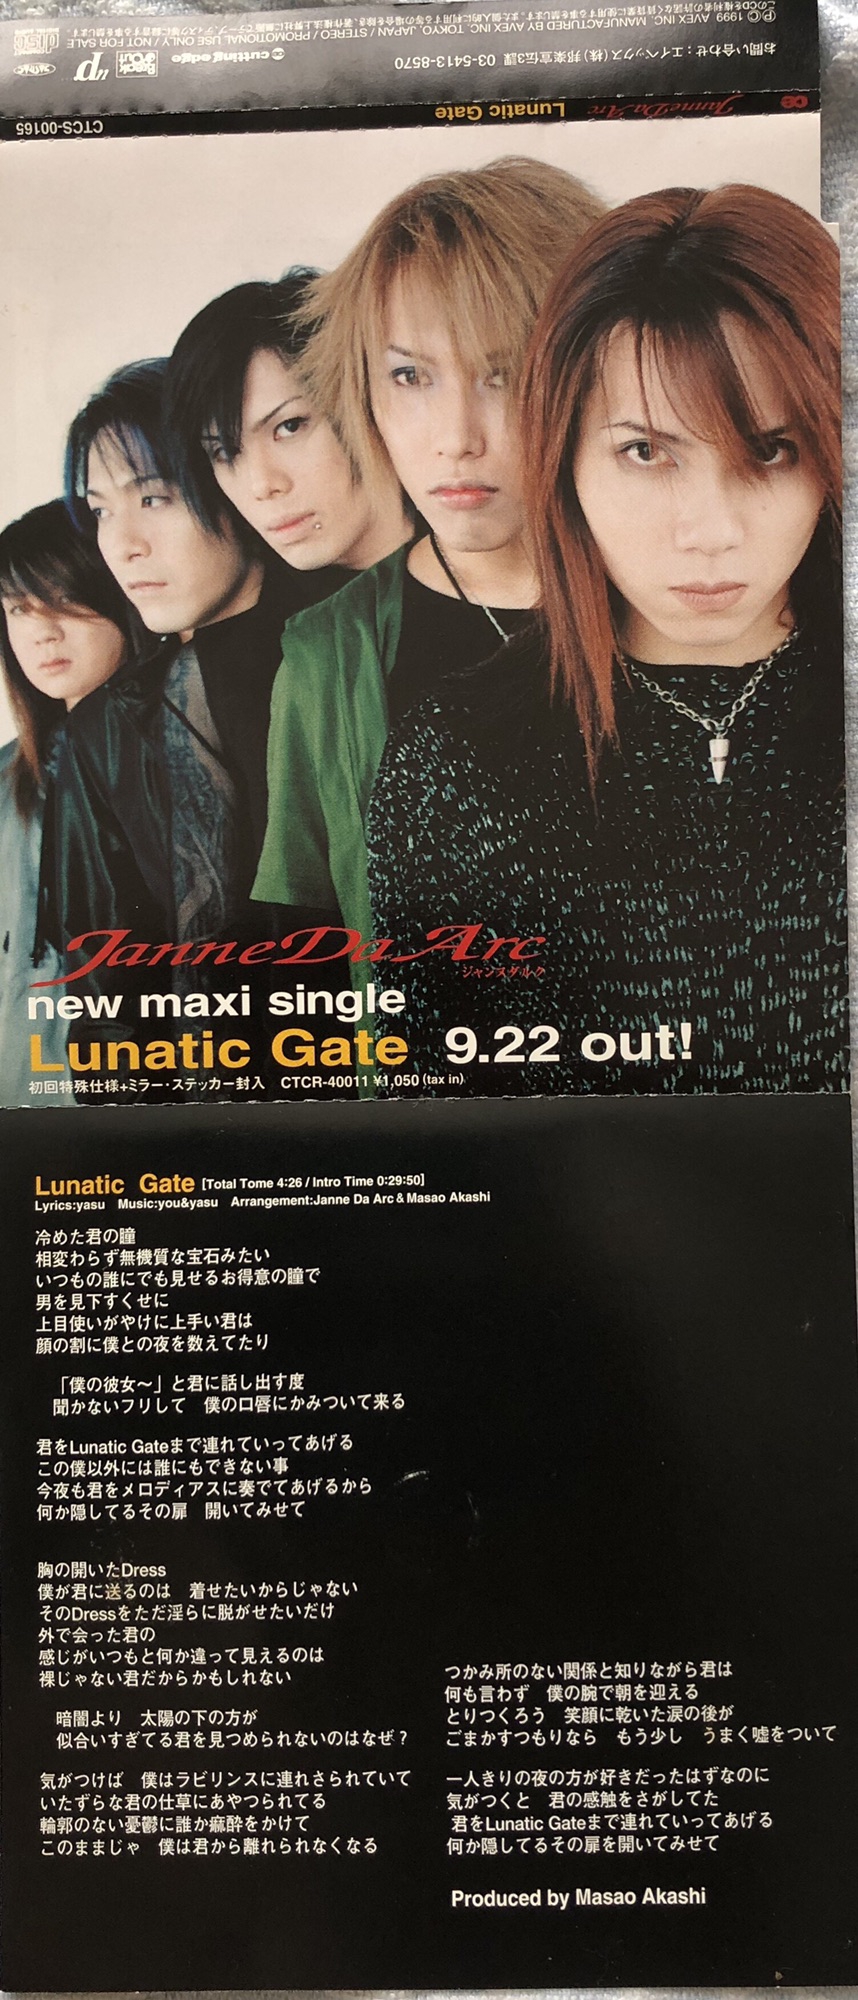 2nd single〝Lunatic Gate〟 | Janne Da Arc discography 〝LEGEND OF  DREAMERS〜終わらない永遠の星座〜〟